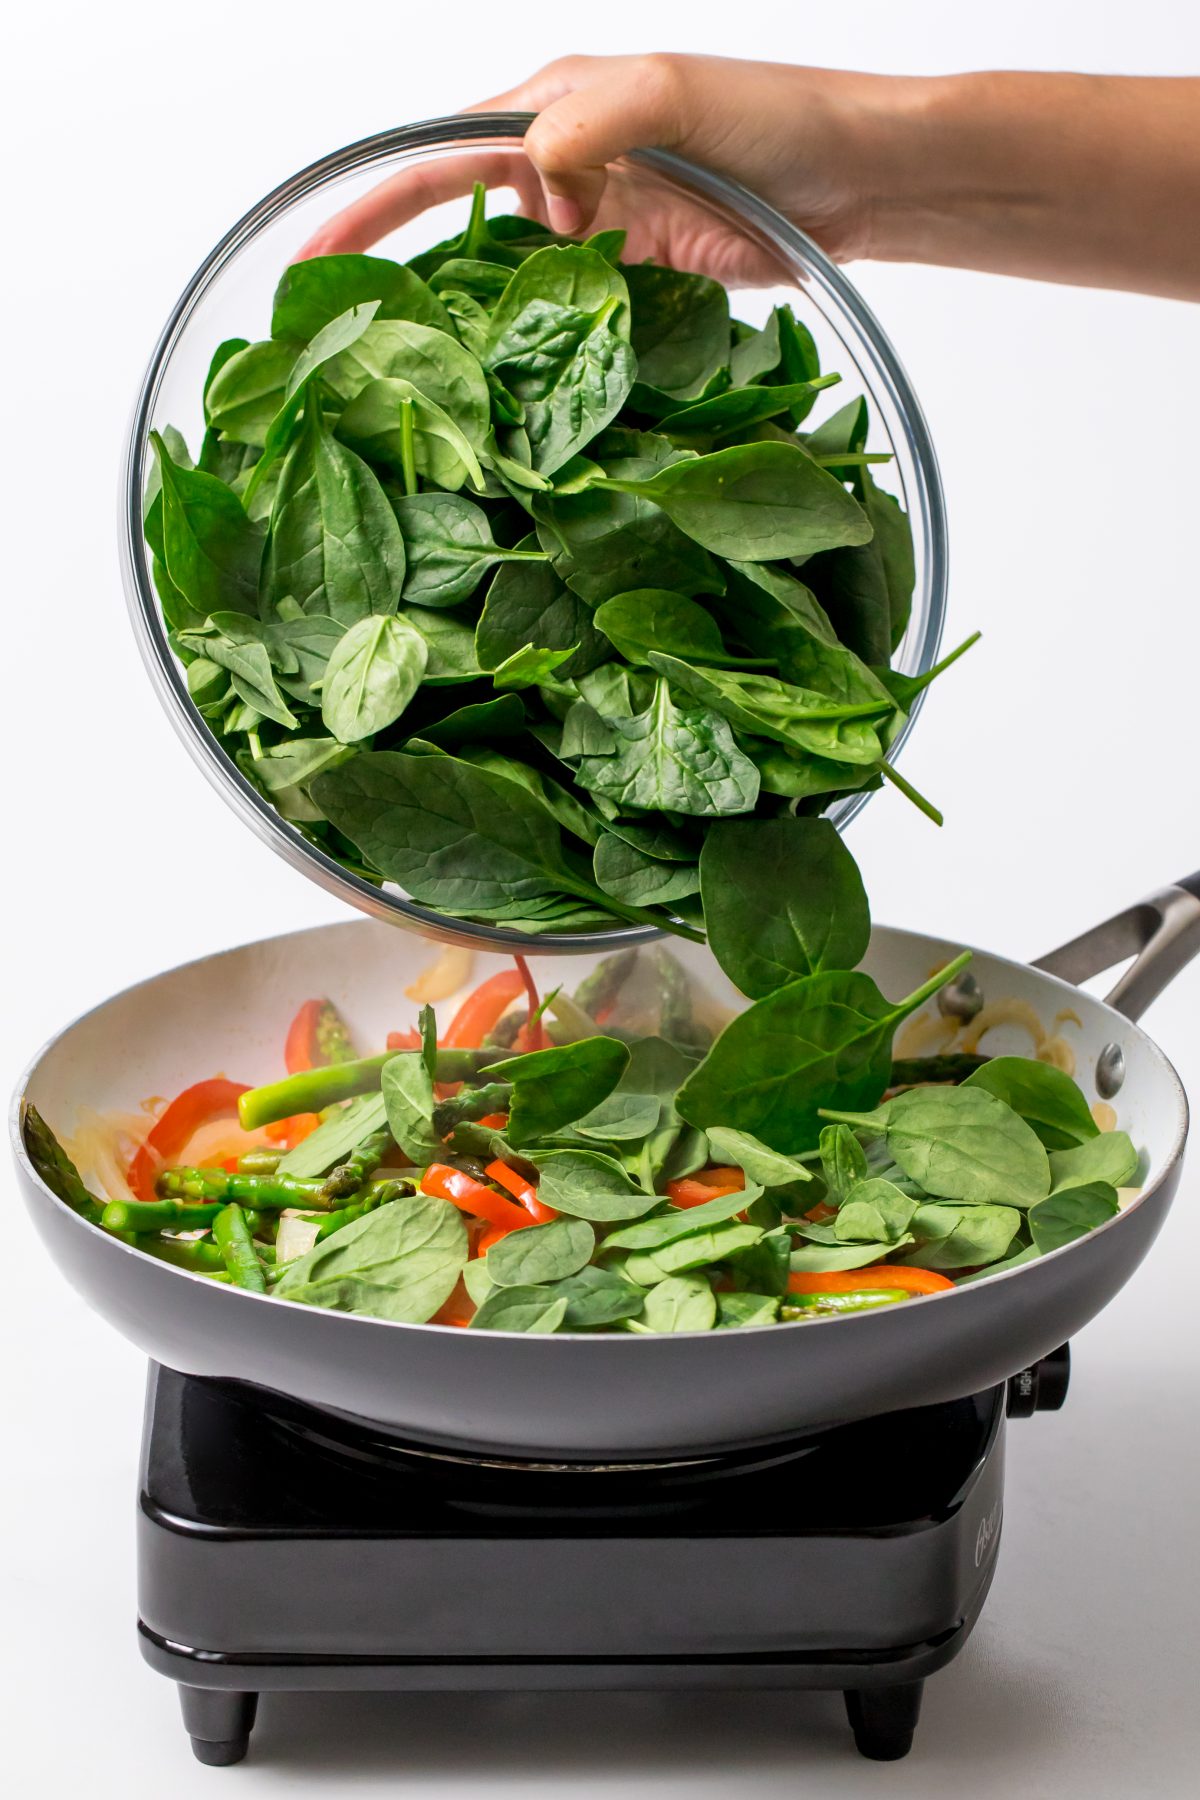 5D4B0888 - Vegetable Wellington - Add spinach